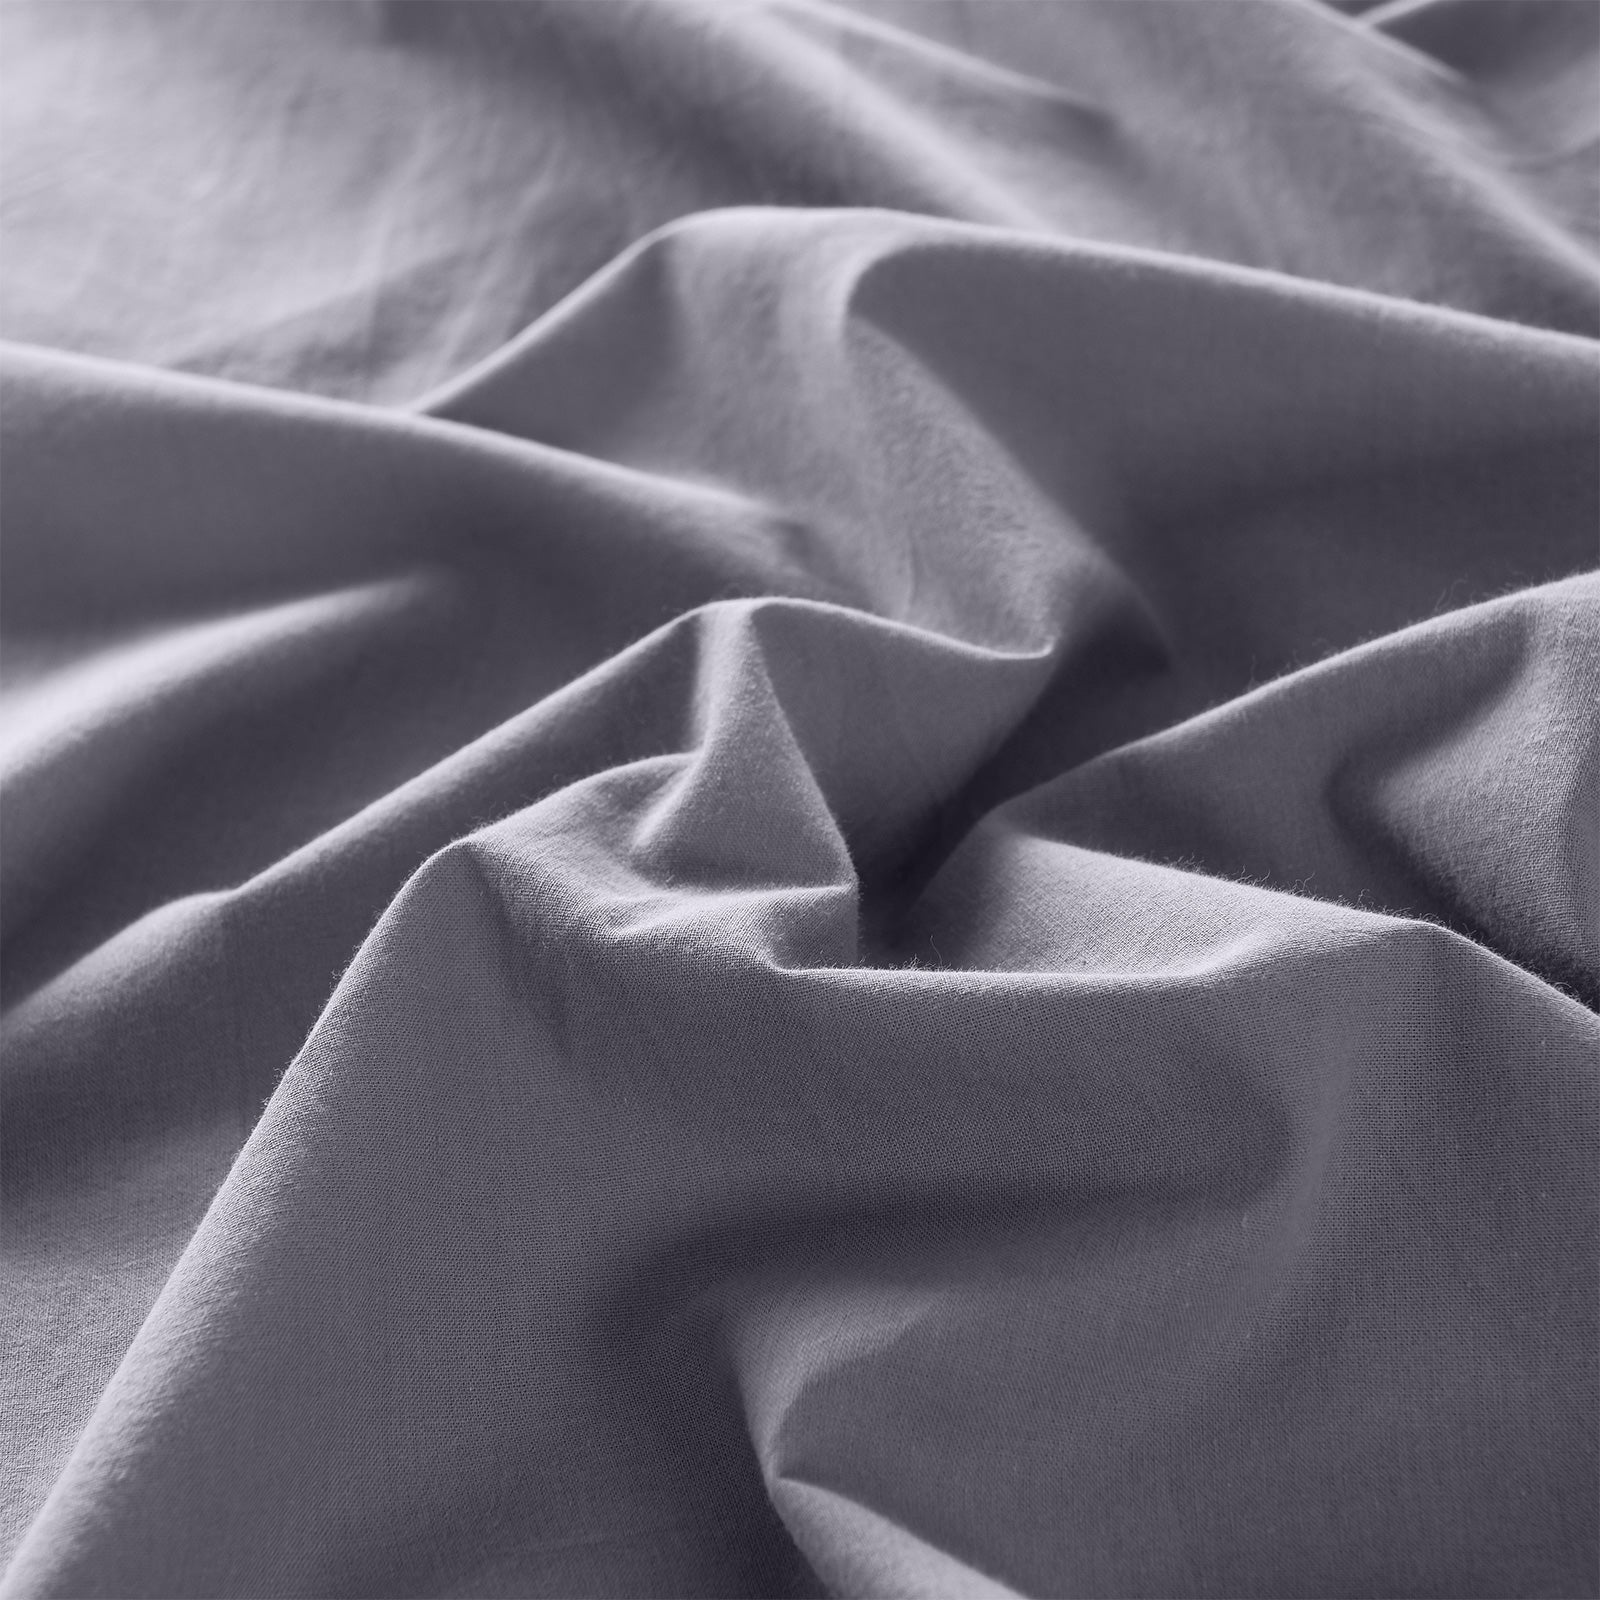 Royal Comfort Vintage Washed 100 % Cotton Sheet Set Single - Grey